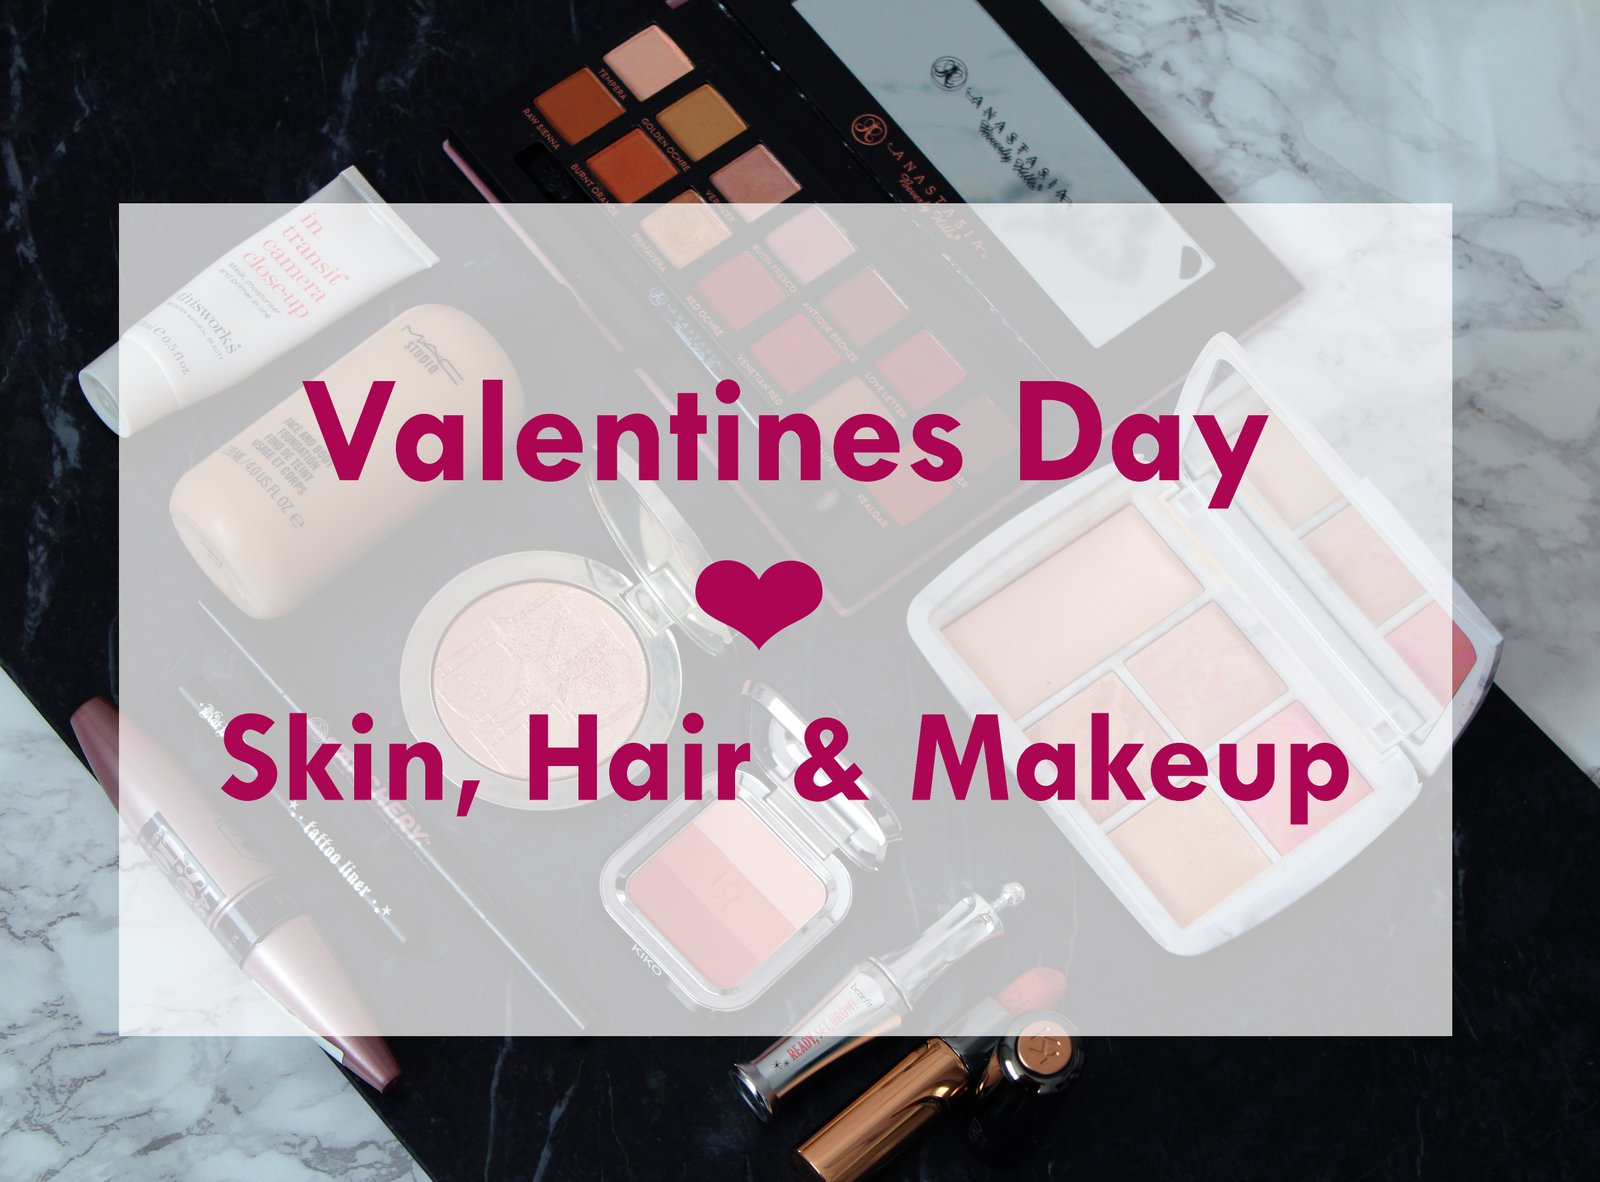 Valentines day skin hair & makeup